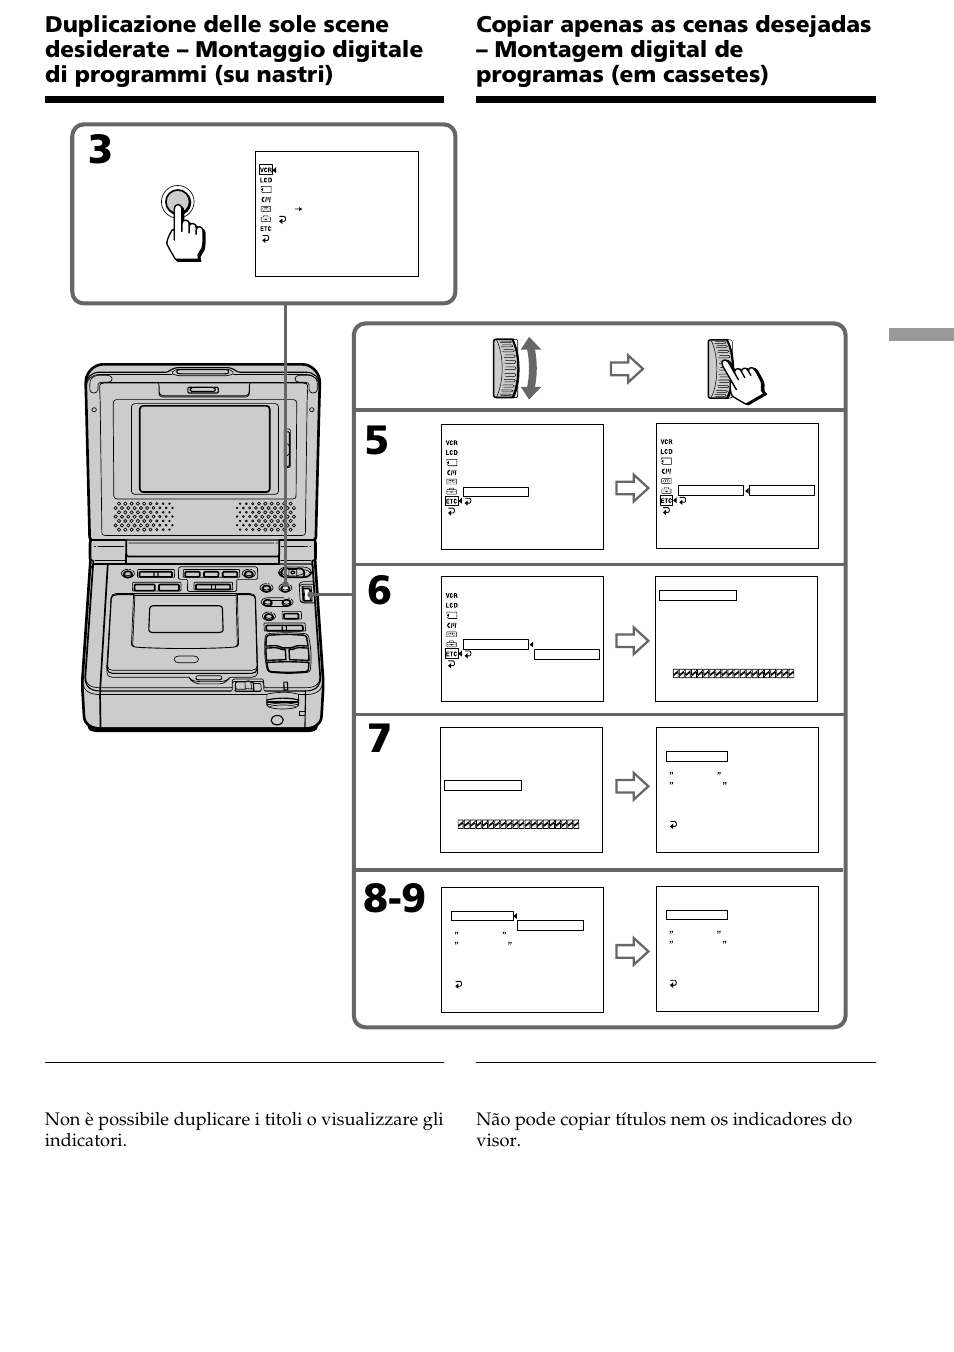 Menu | Sony GV-D1000 Manuale d'uso | Pagina 79 / 220